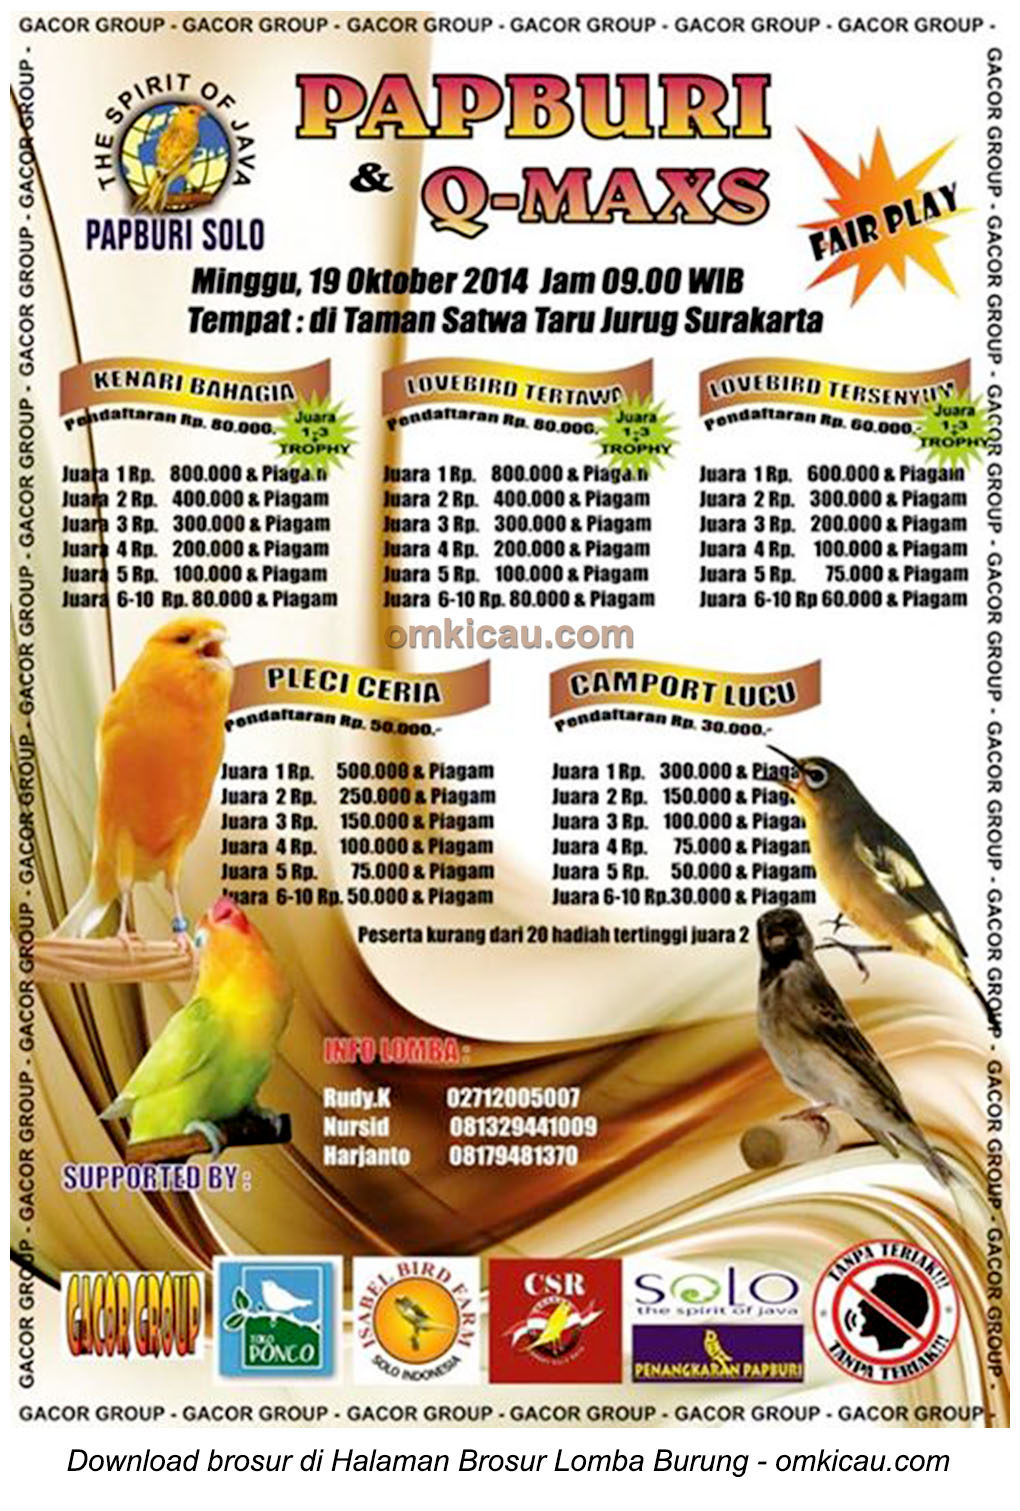 Brosur Lomba Burung Berkicau Papburi Solo 19 Oktober 2014